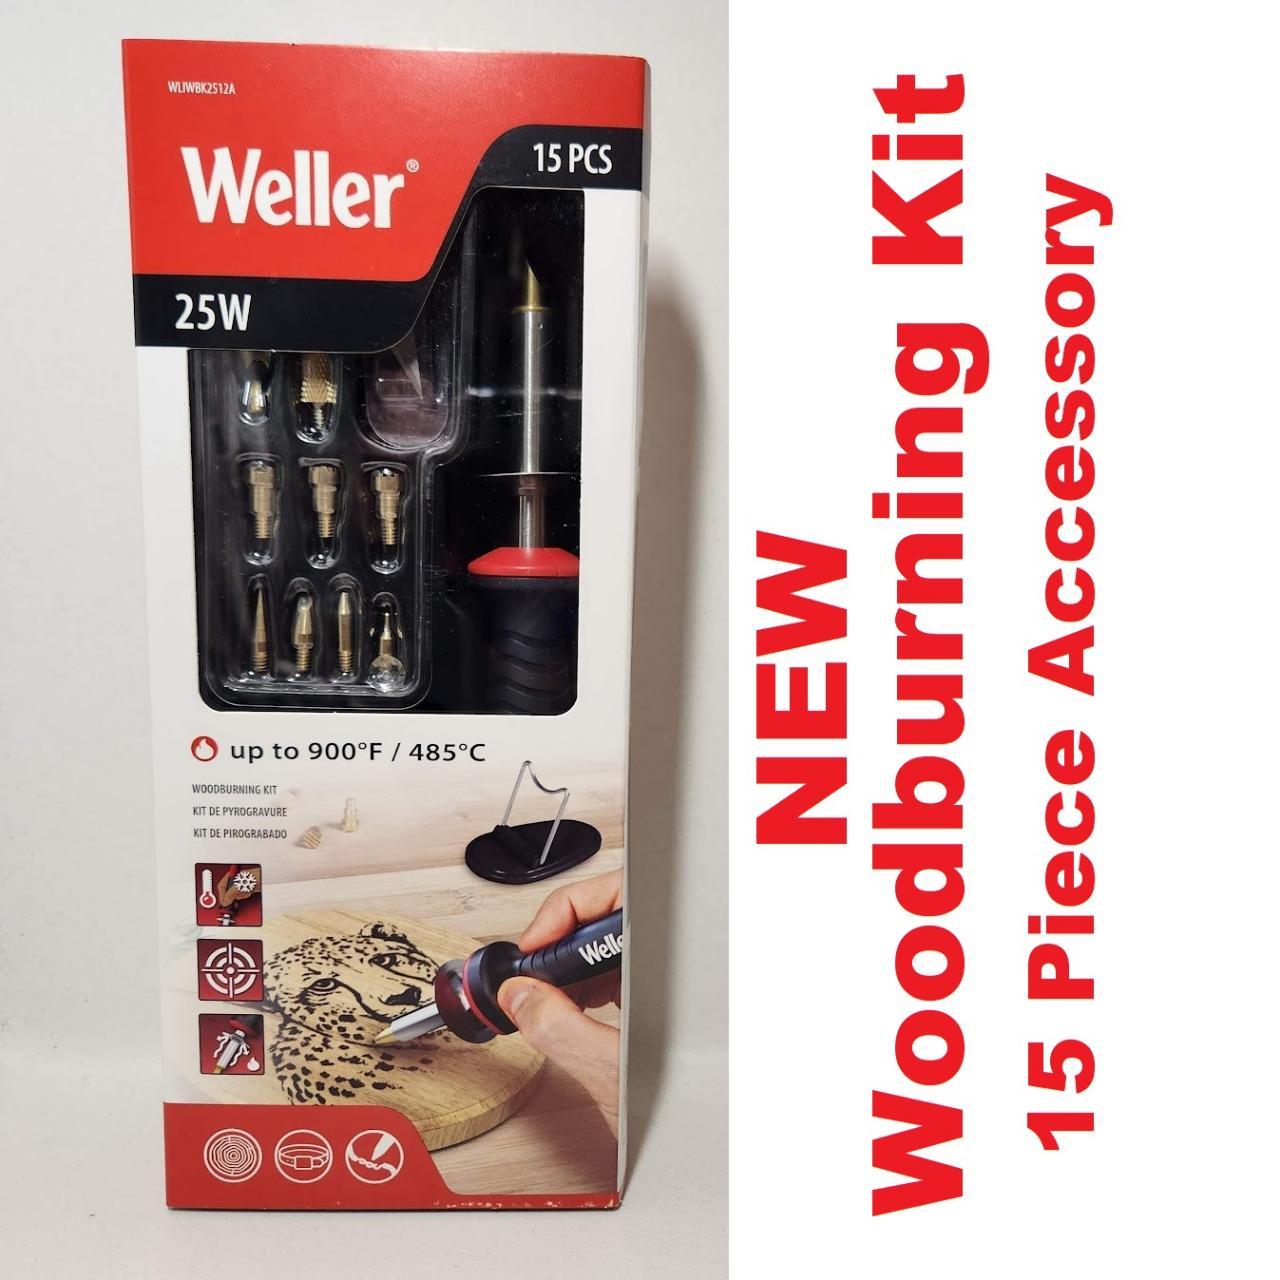 Weller Woodburning Kit 25 W